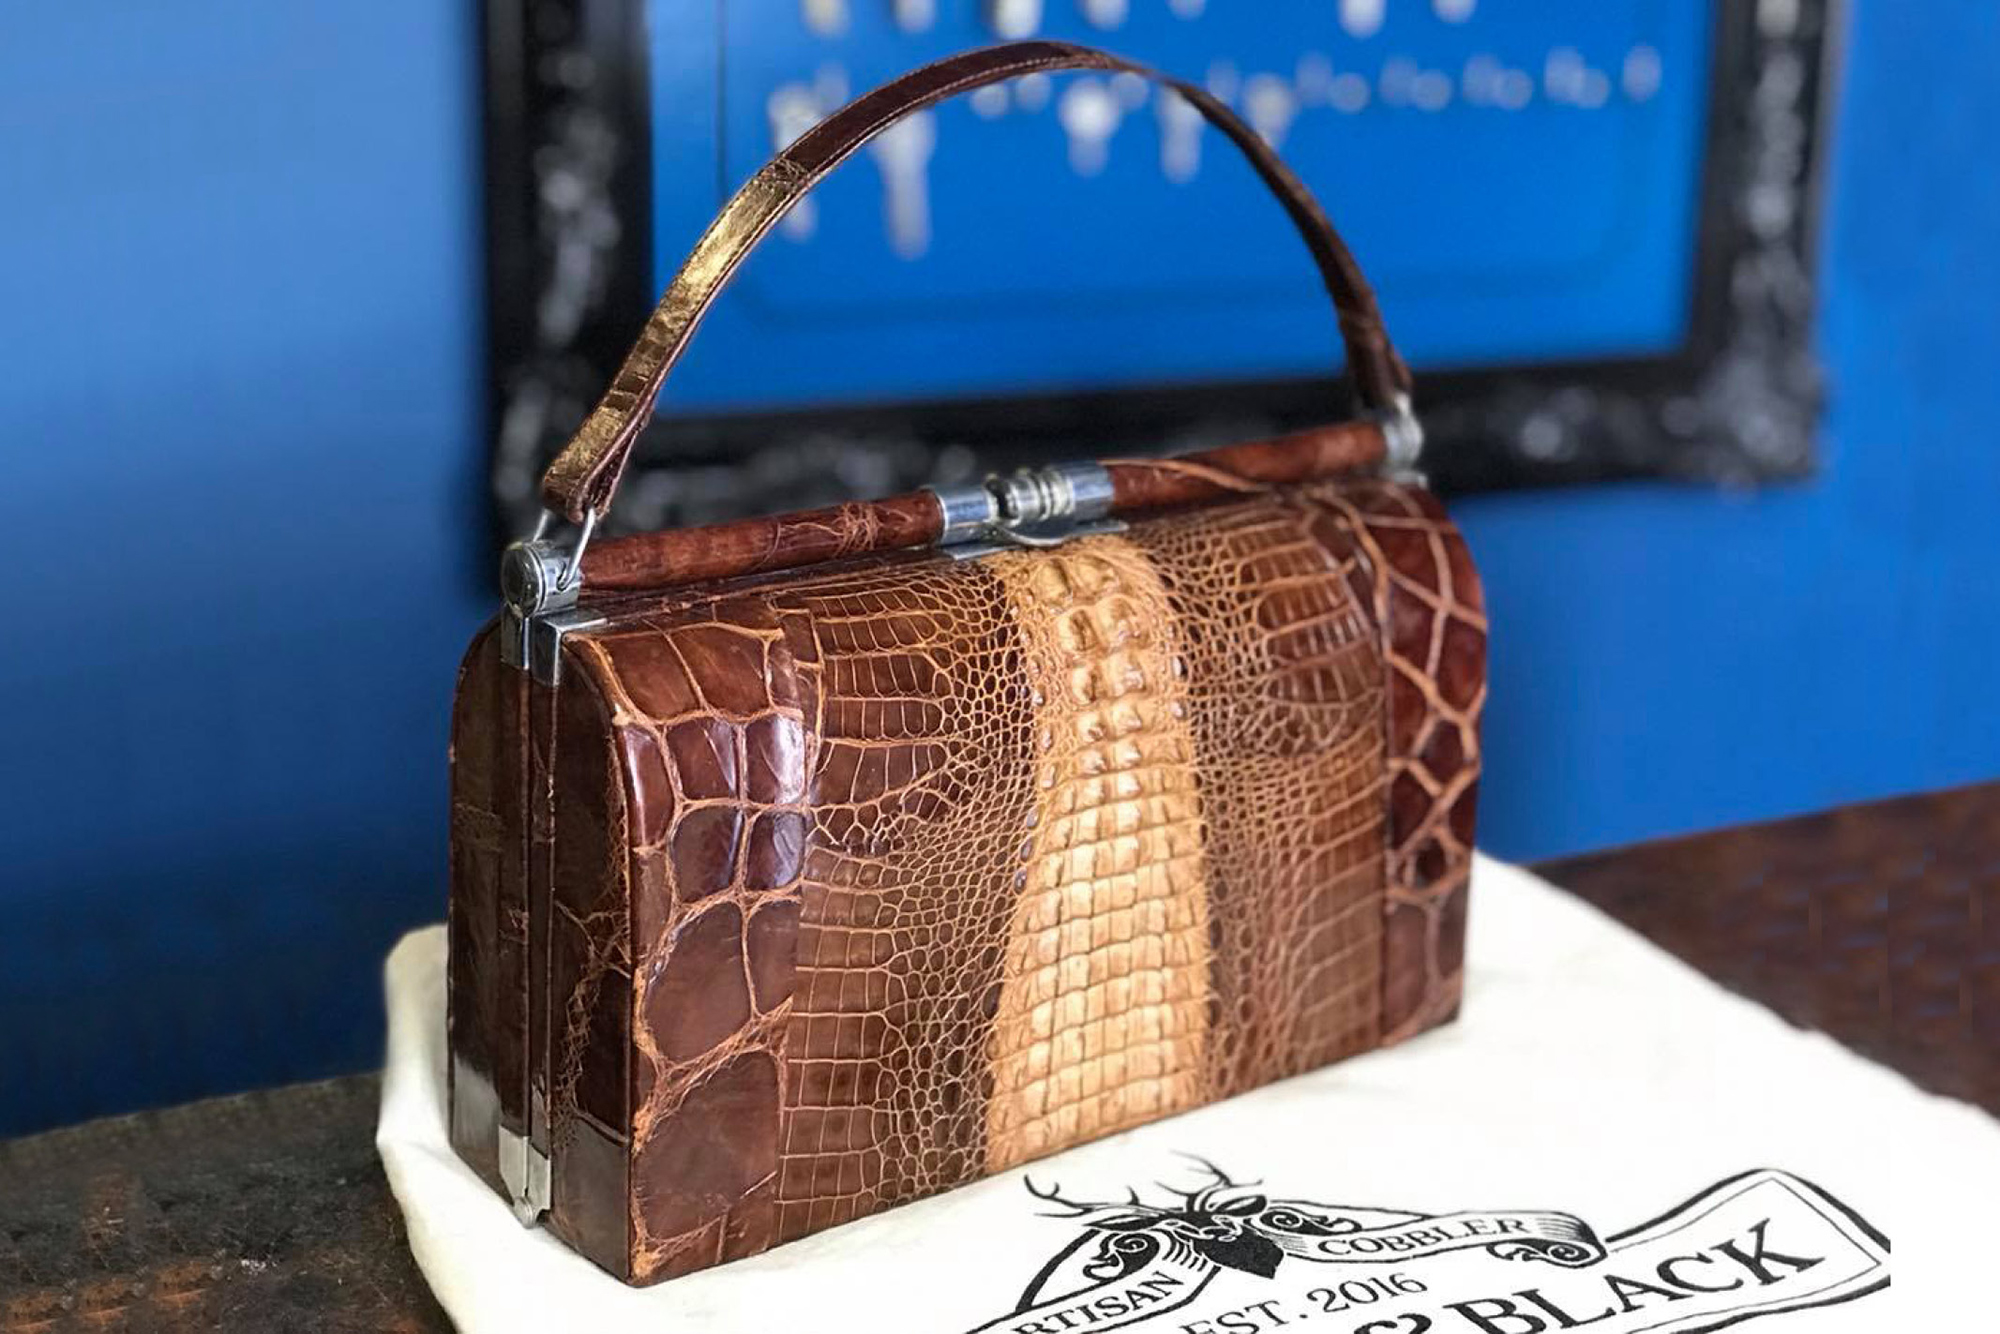 Crocodile vintage handbag restoration | From old to new